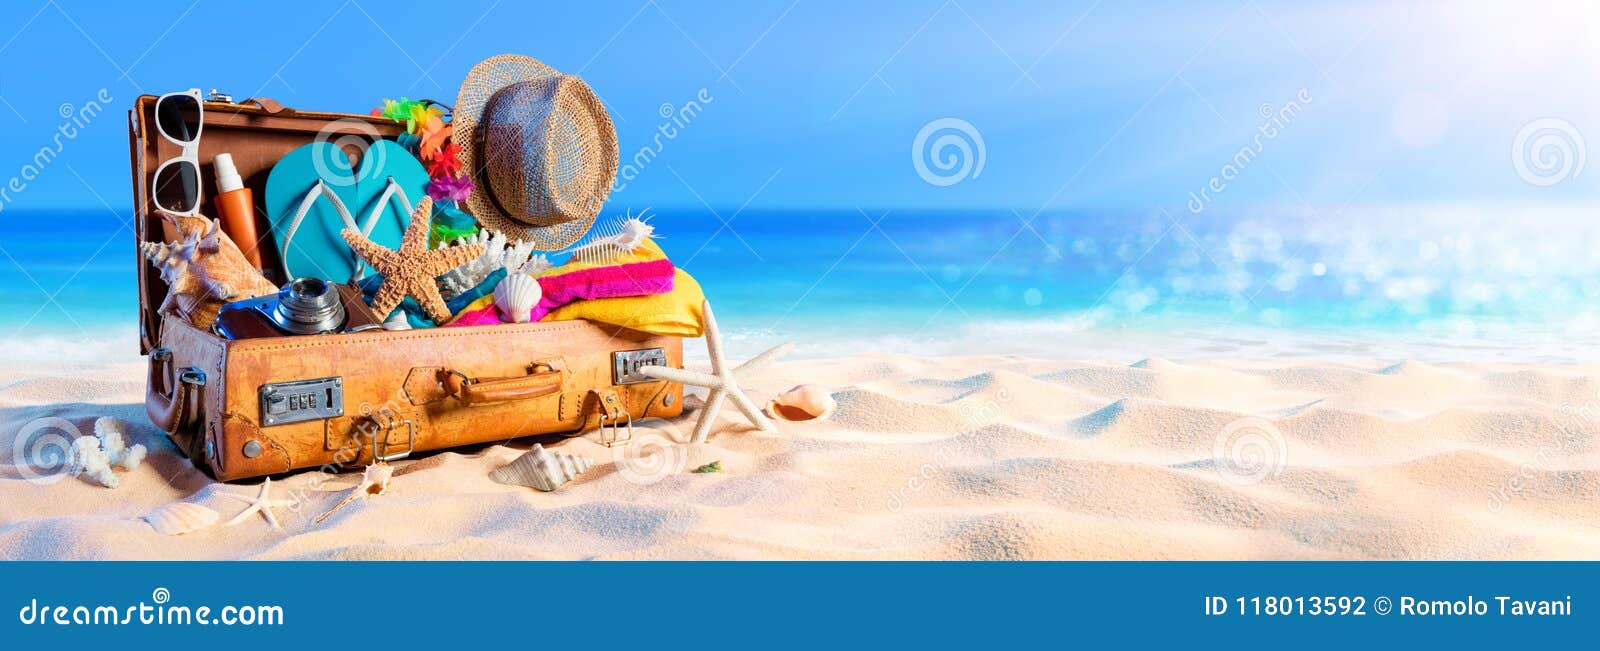 beach preparation - accessories in suitcase